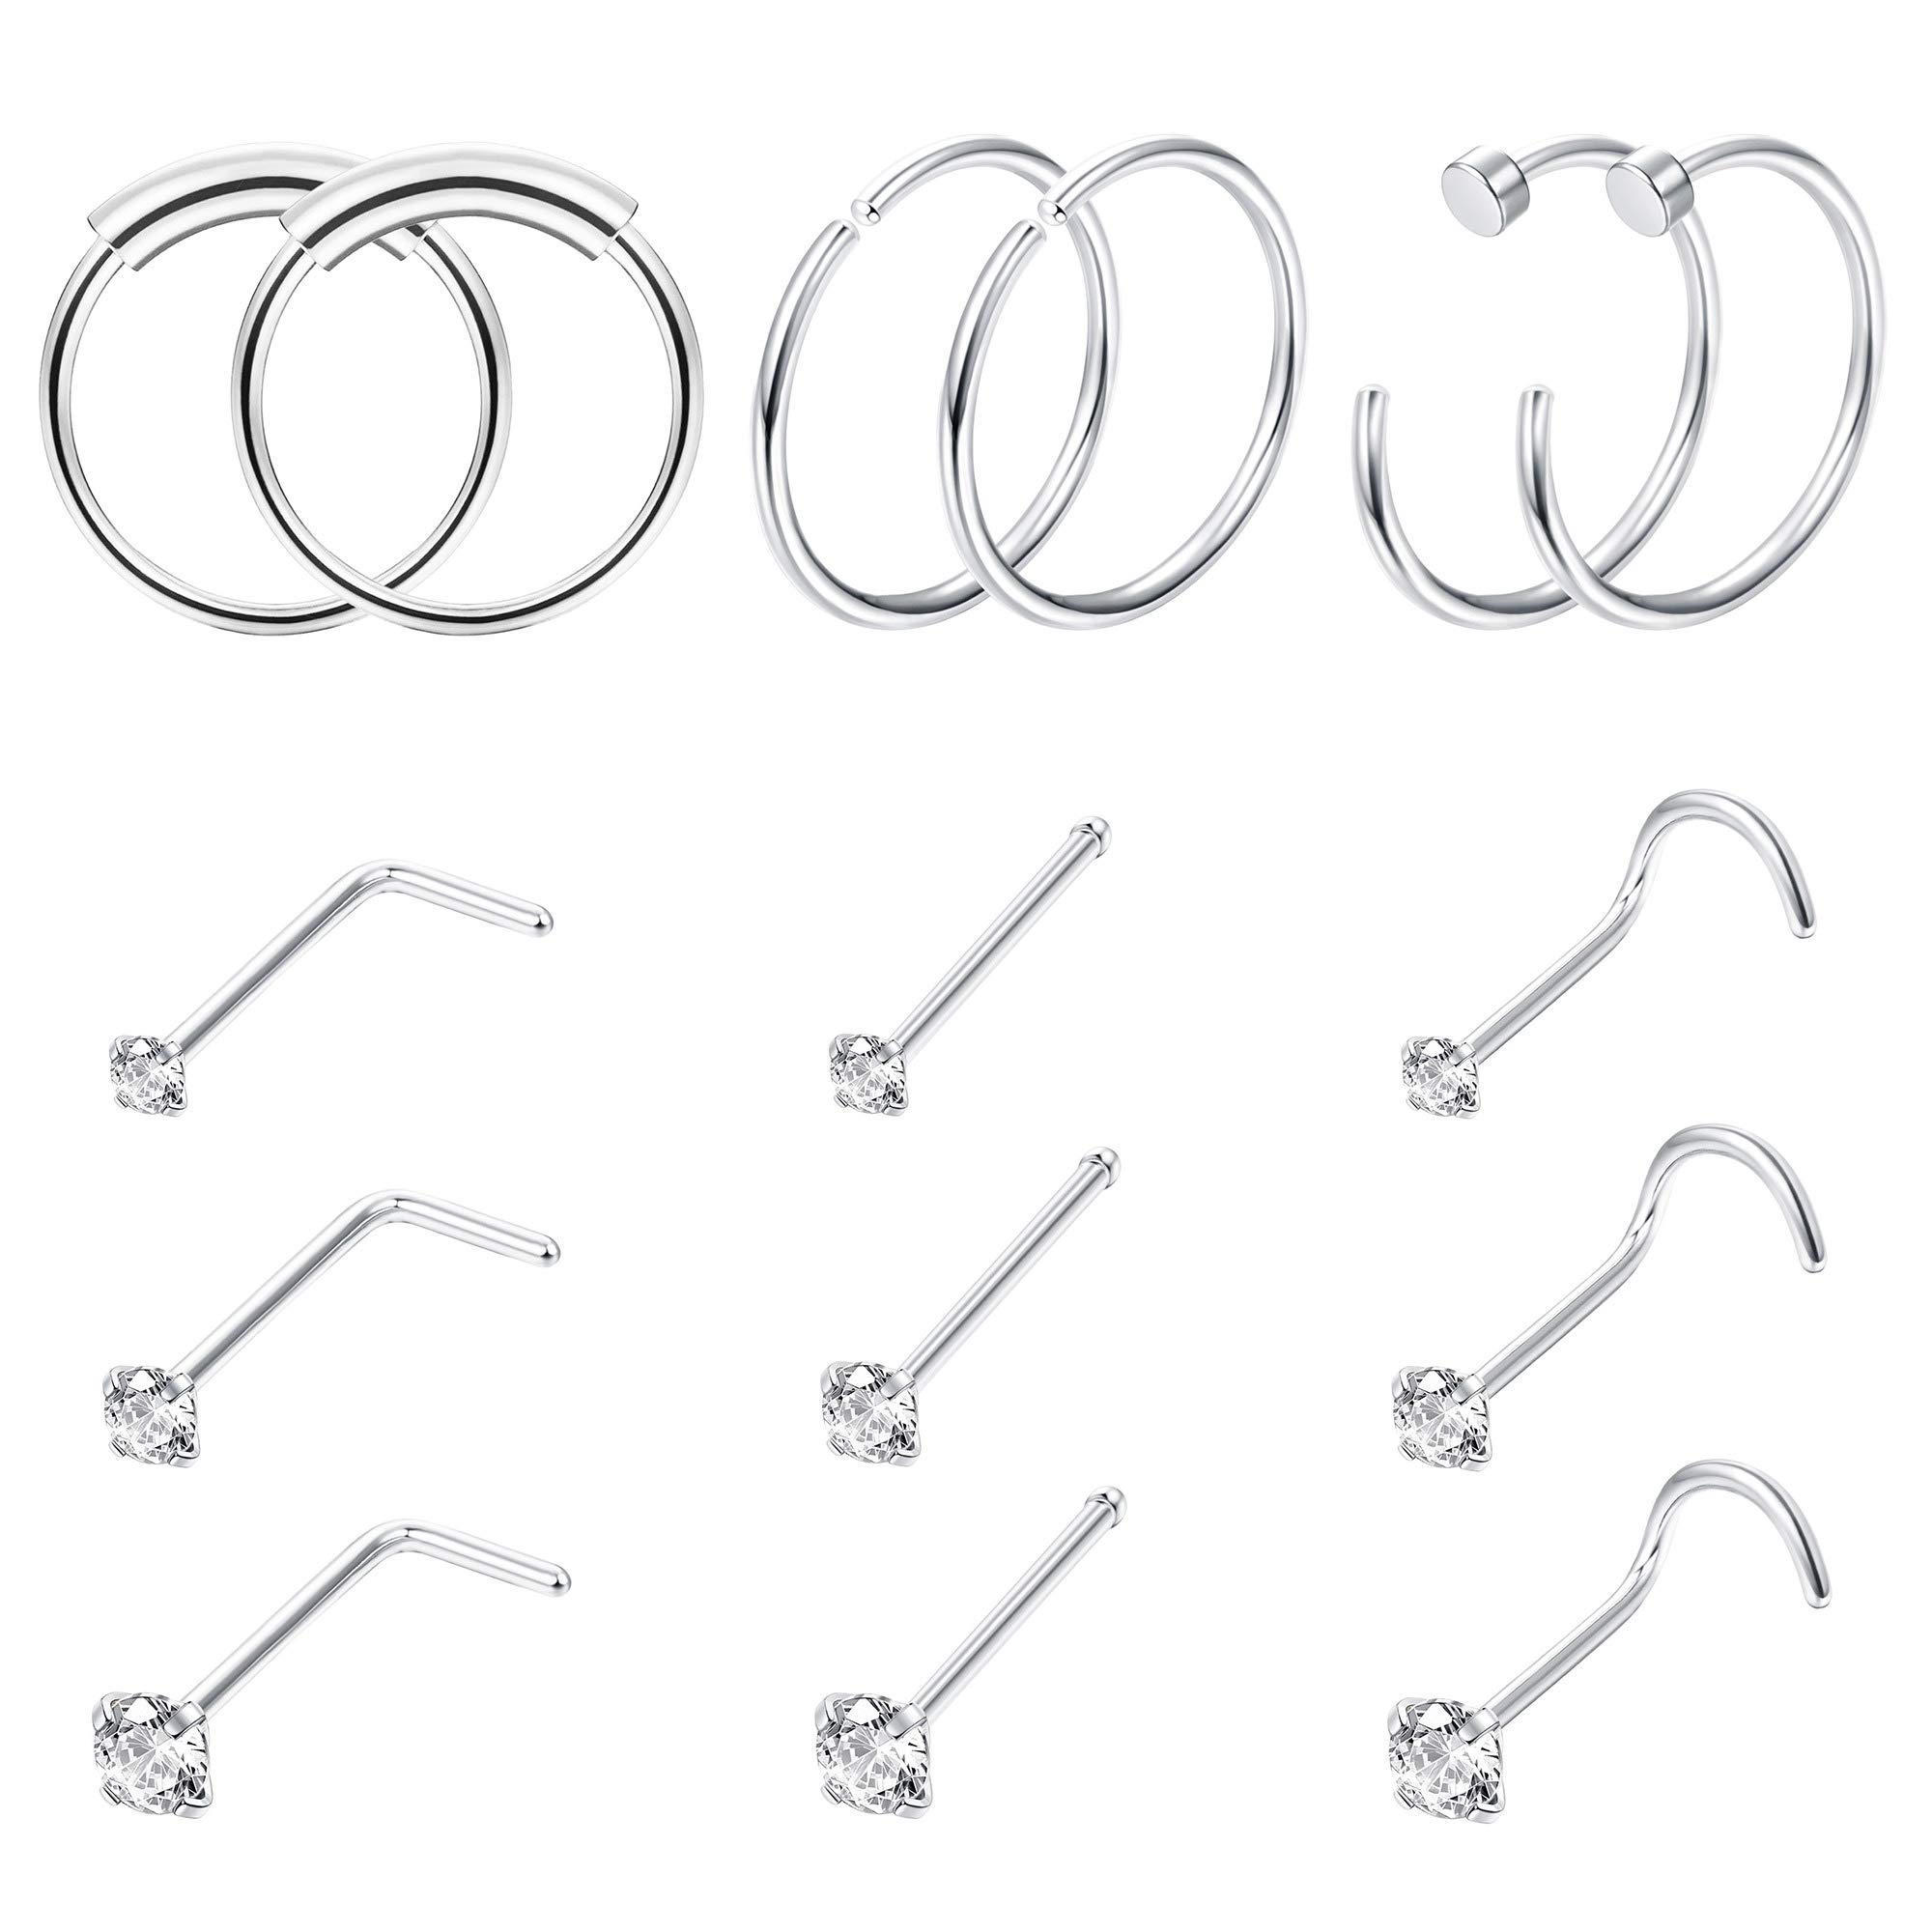 FINREZIO 15PCS 22G 20G 18G Surgical Steel Nose Rings Hoop Studs Cartilage Earrings Body Piercing Jewelry 1.5mm 2mm 2.5mm CZ